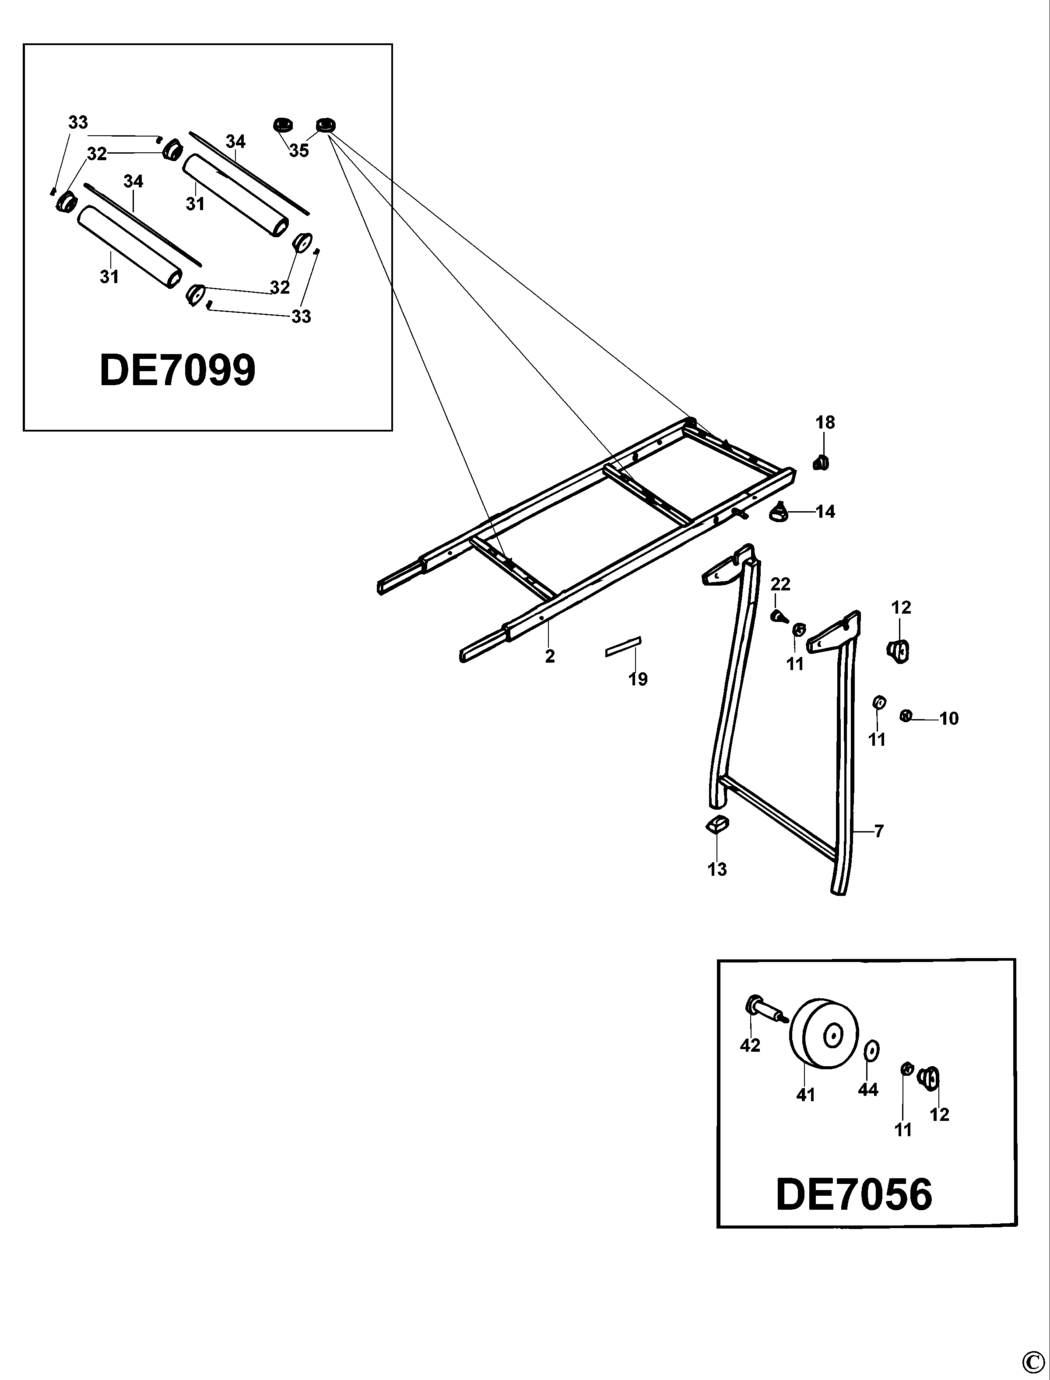 Dewalt DE7099 Type 4 Roller Support Spare Parts